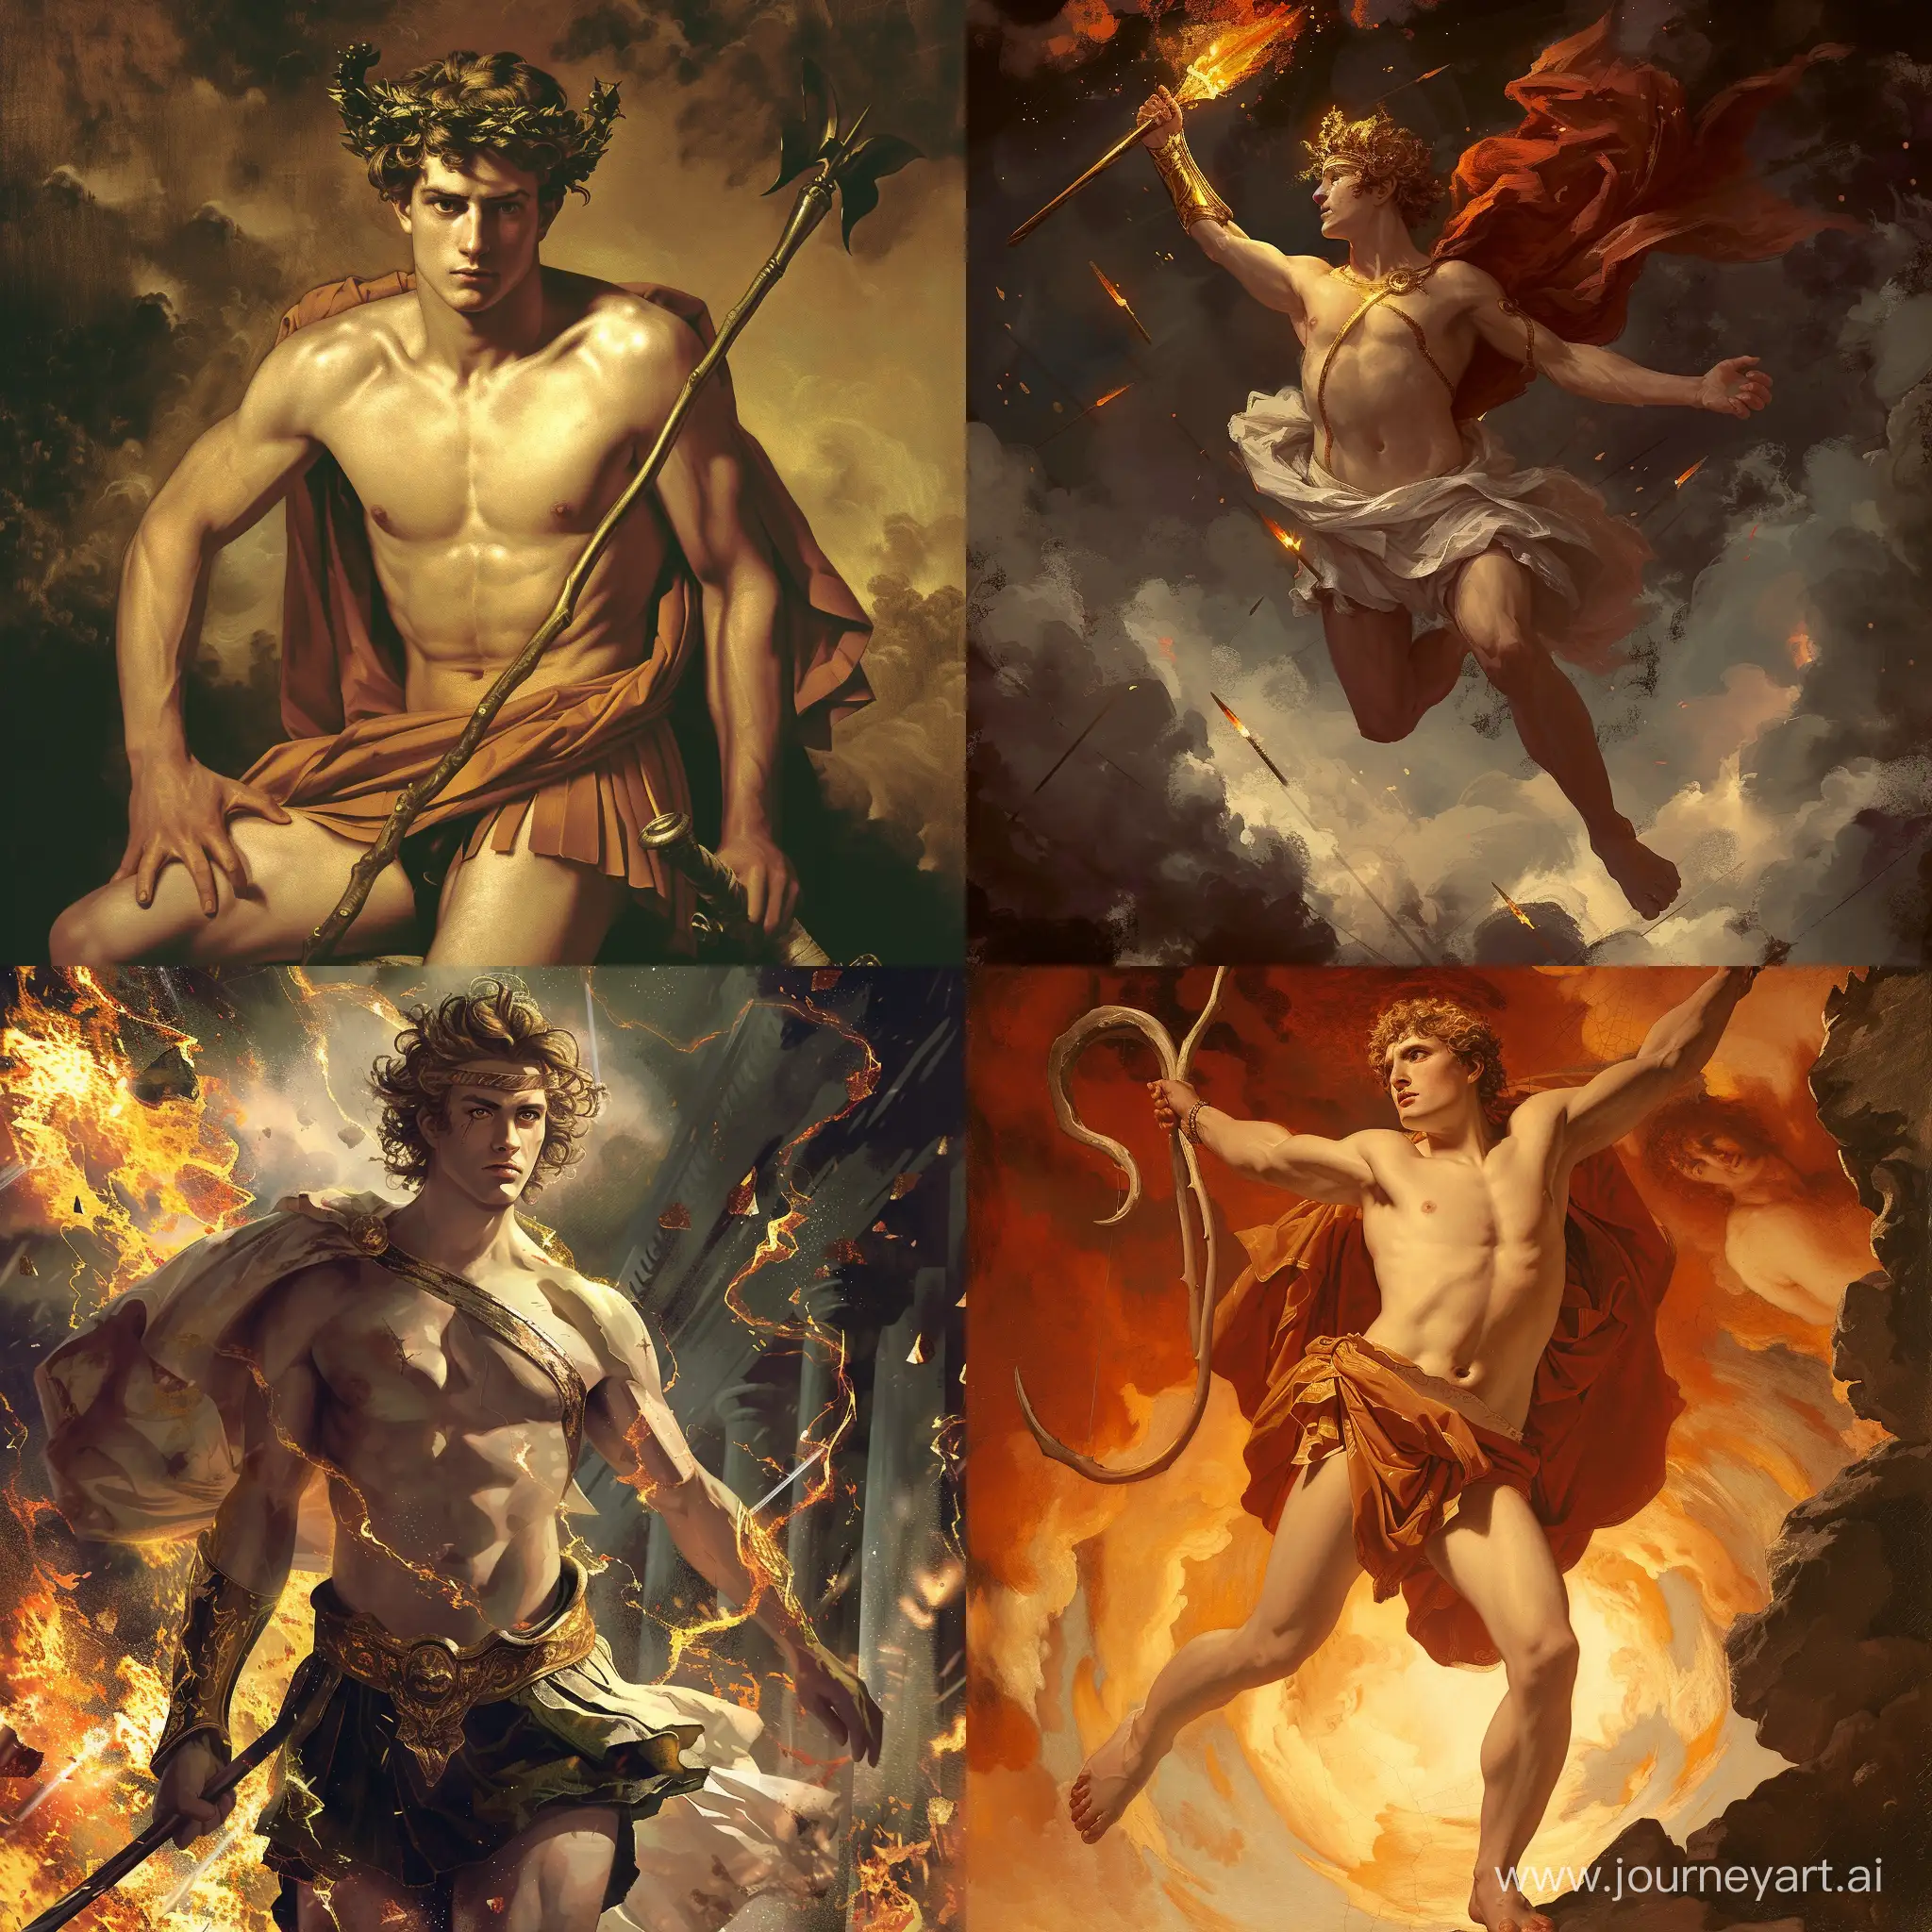 Apollo-in-Hades-Style-Art-Mythical-God-with-Fiery-Aura